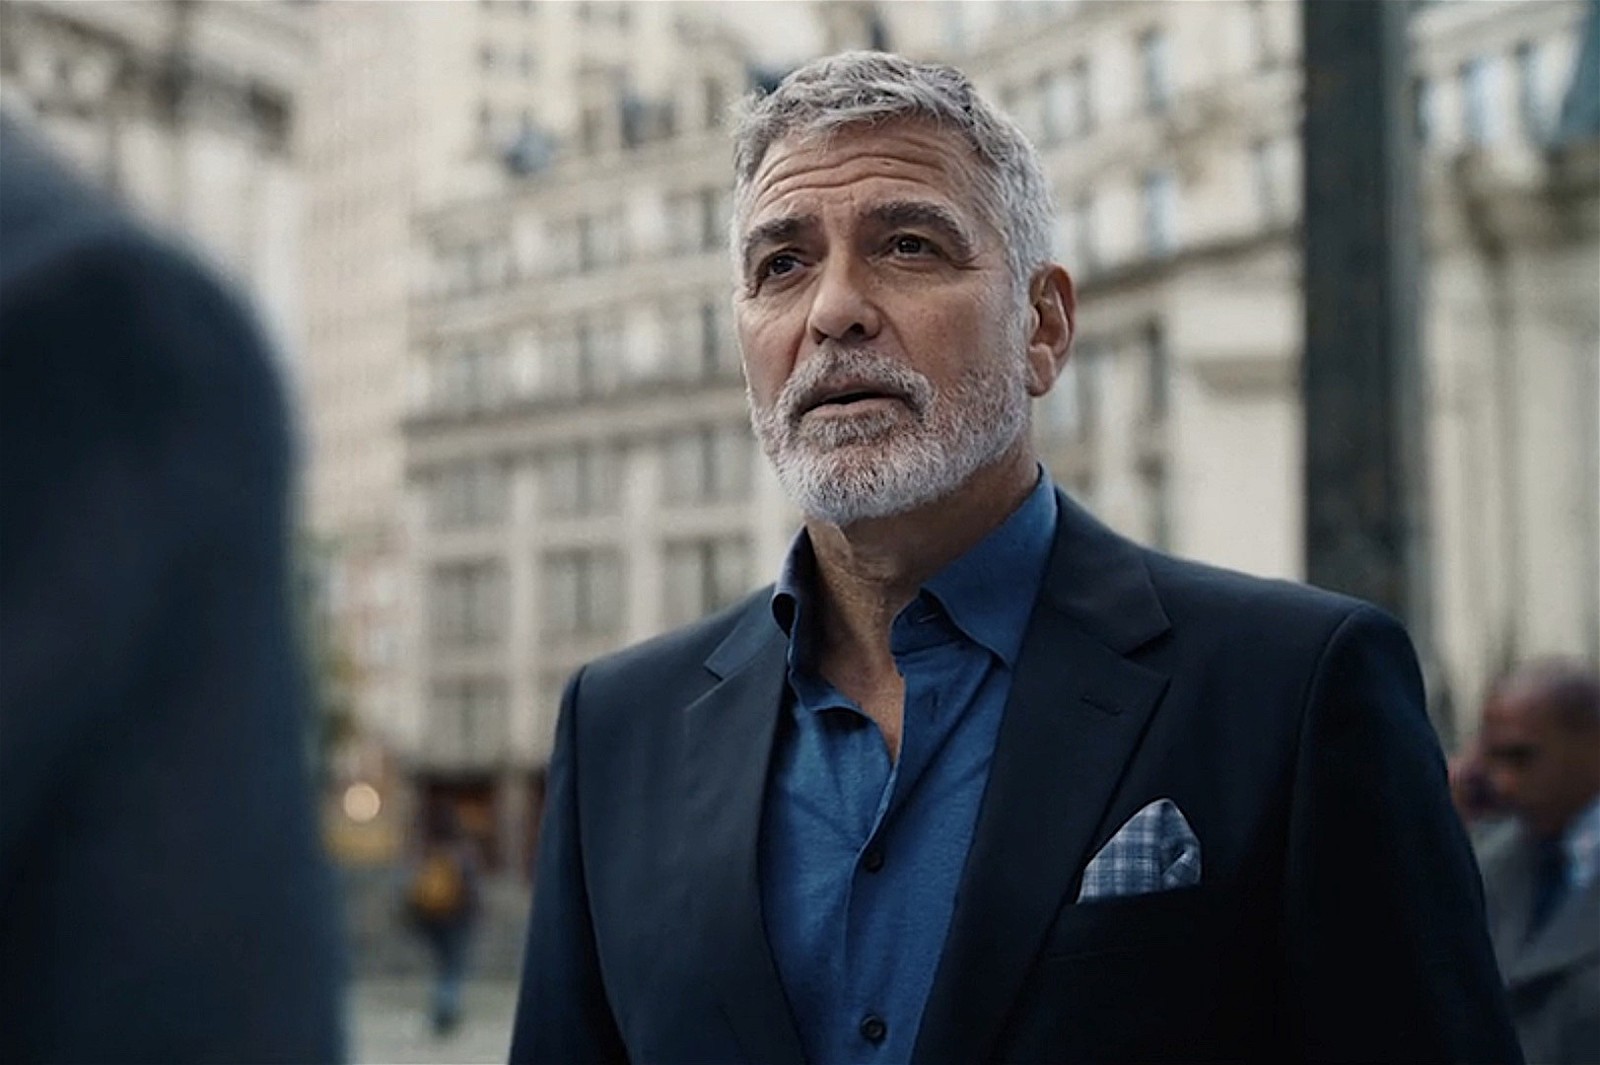 Hollywood actor George Clooney